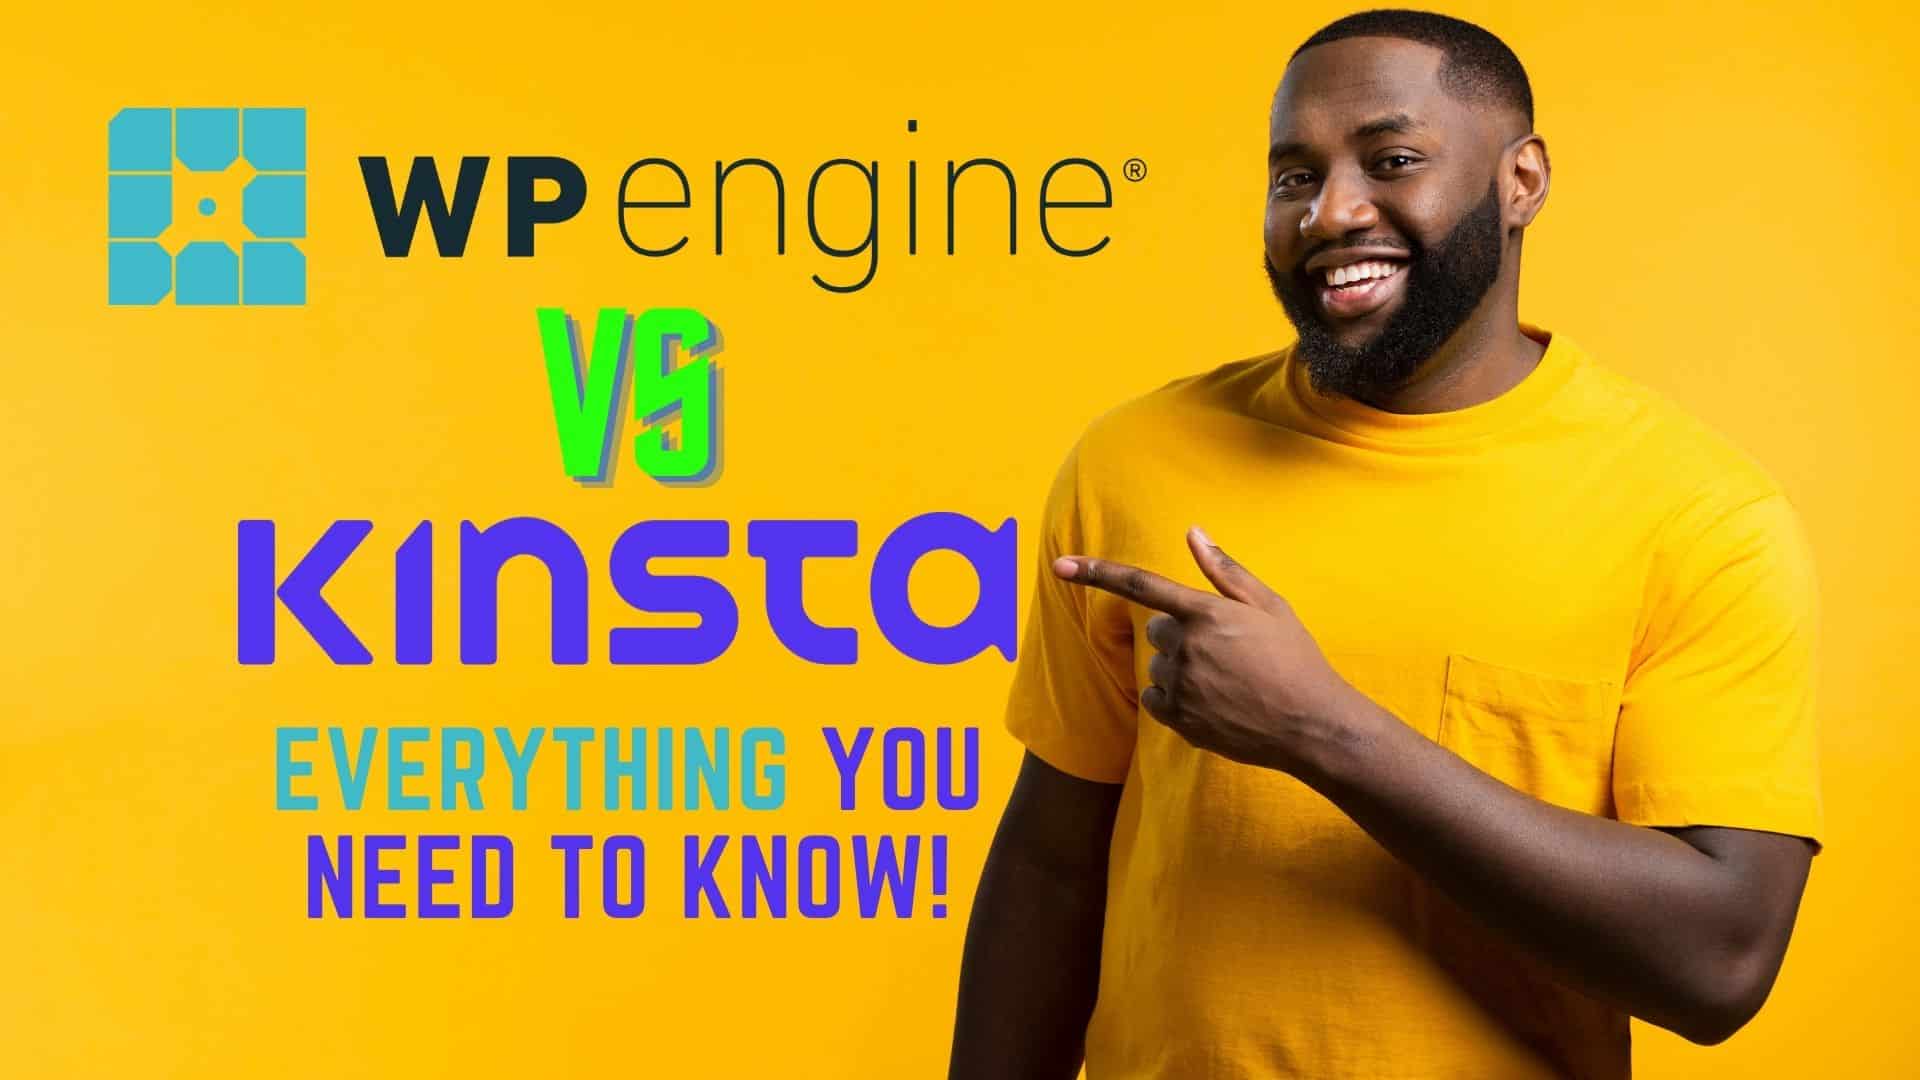 Kinsta vs WP Engine